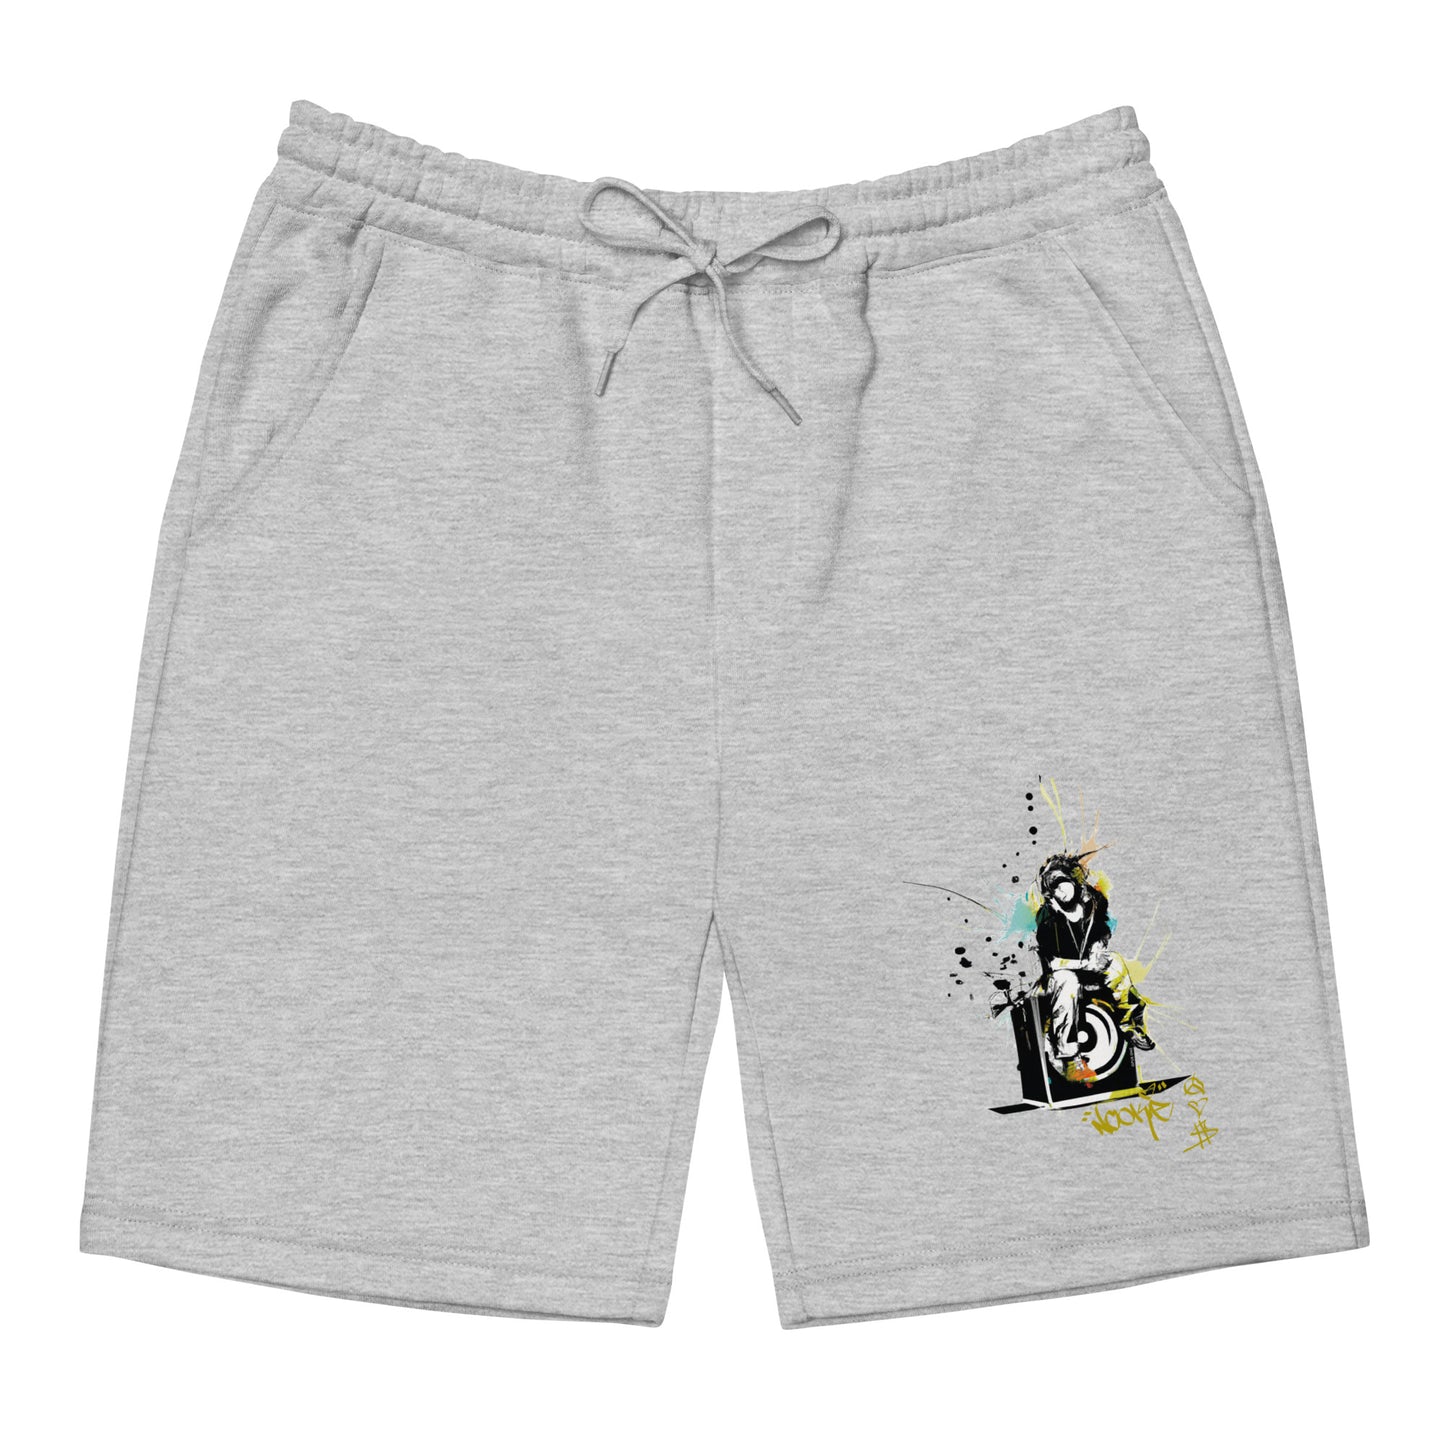 Nookie (v1) Men's fleece shorts